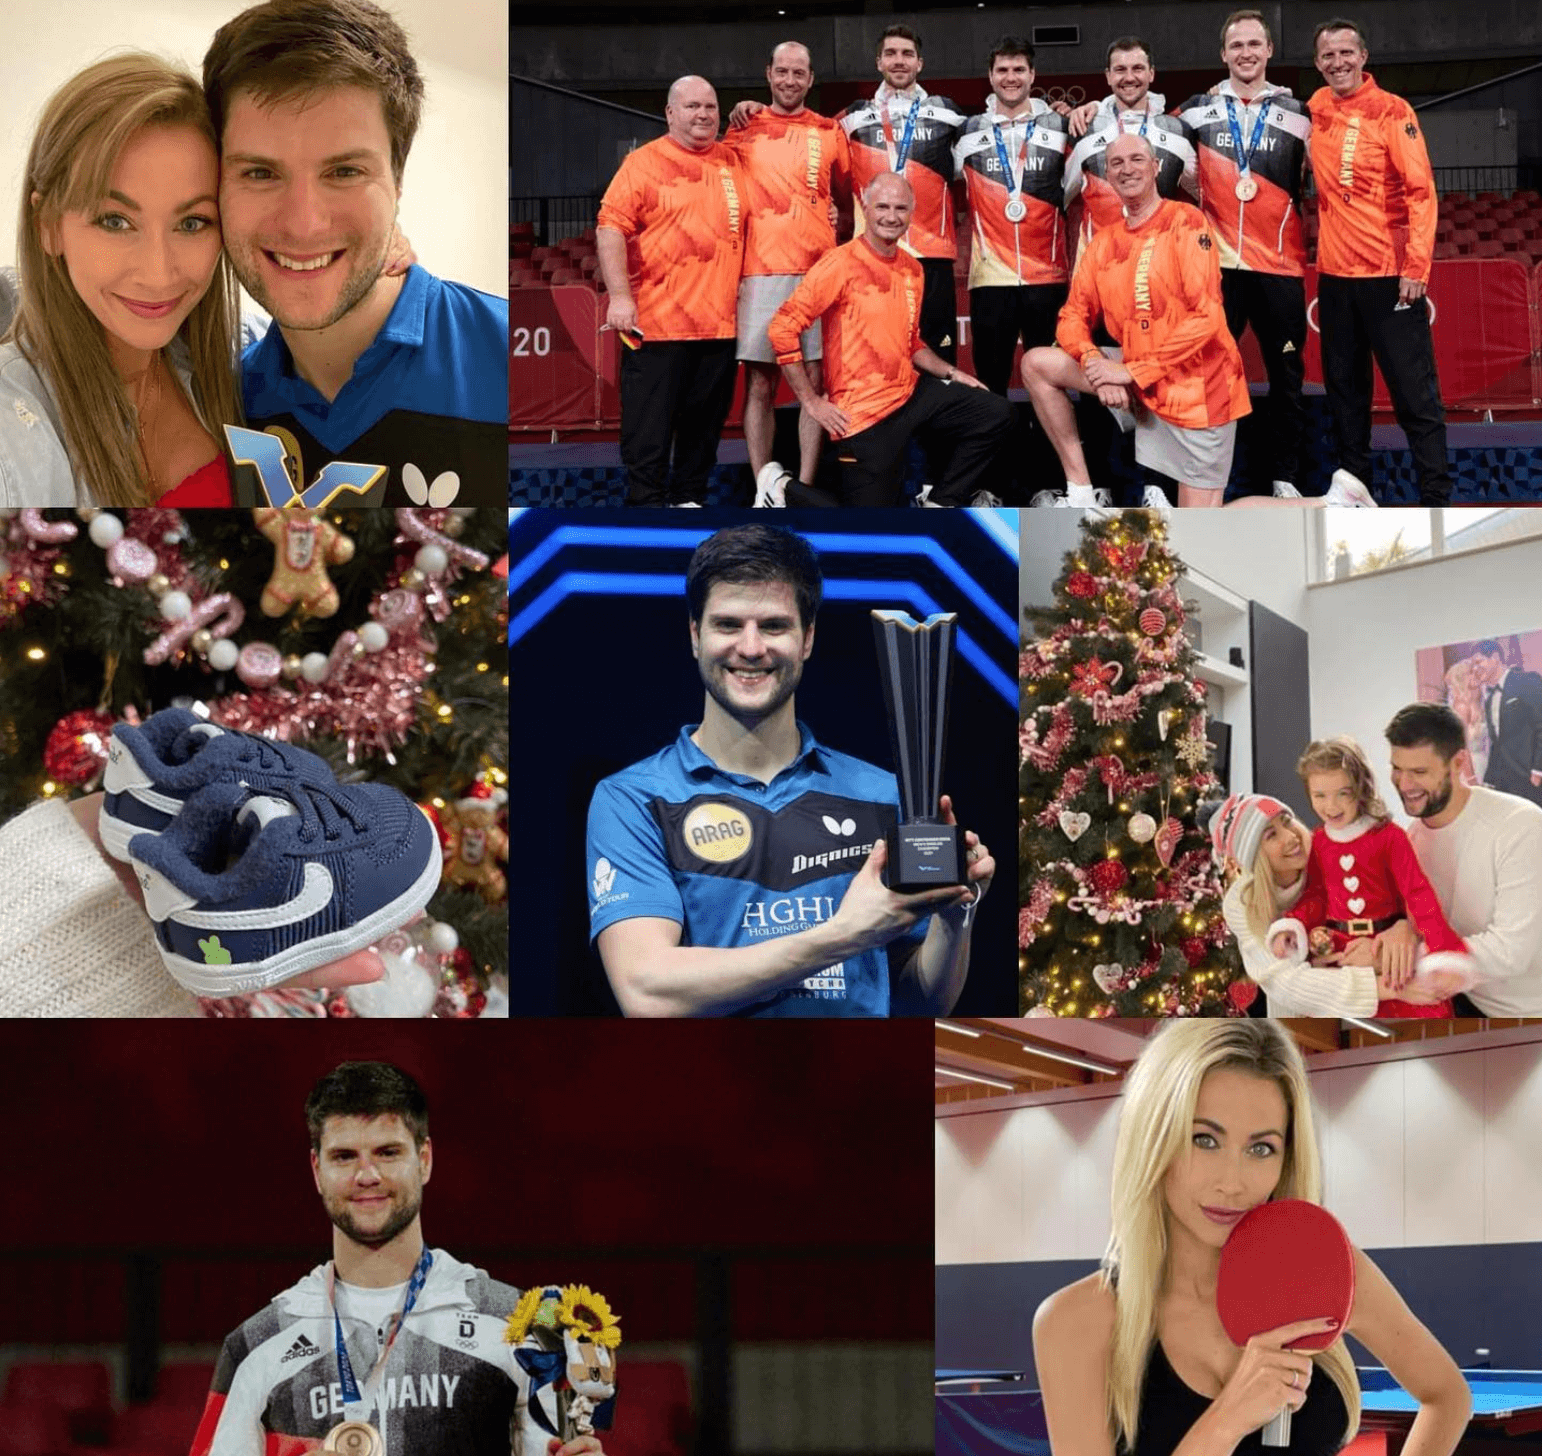 Dimitirij Ovtcharov Tischtennis Instagram Account Bilder